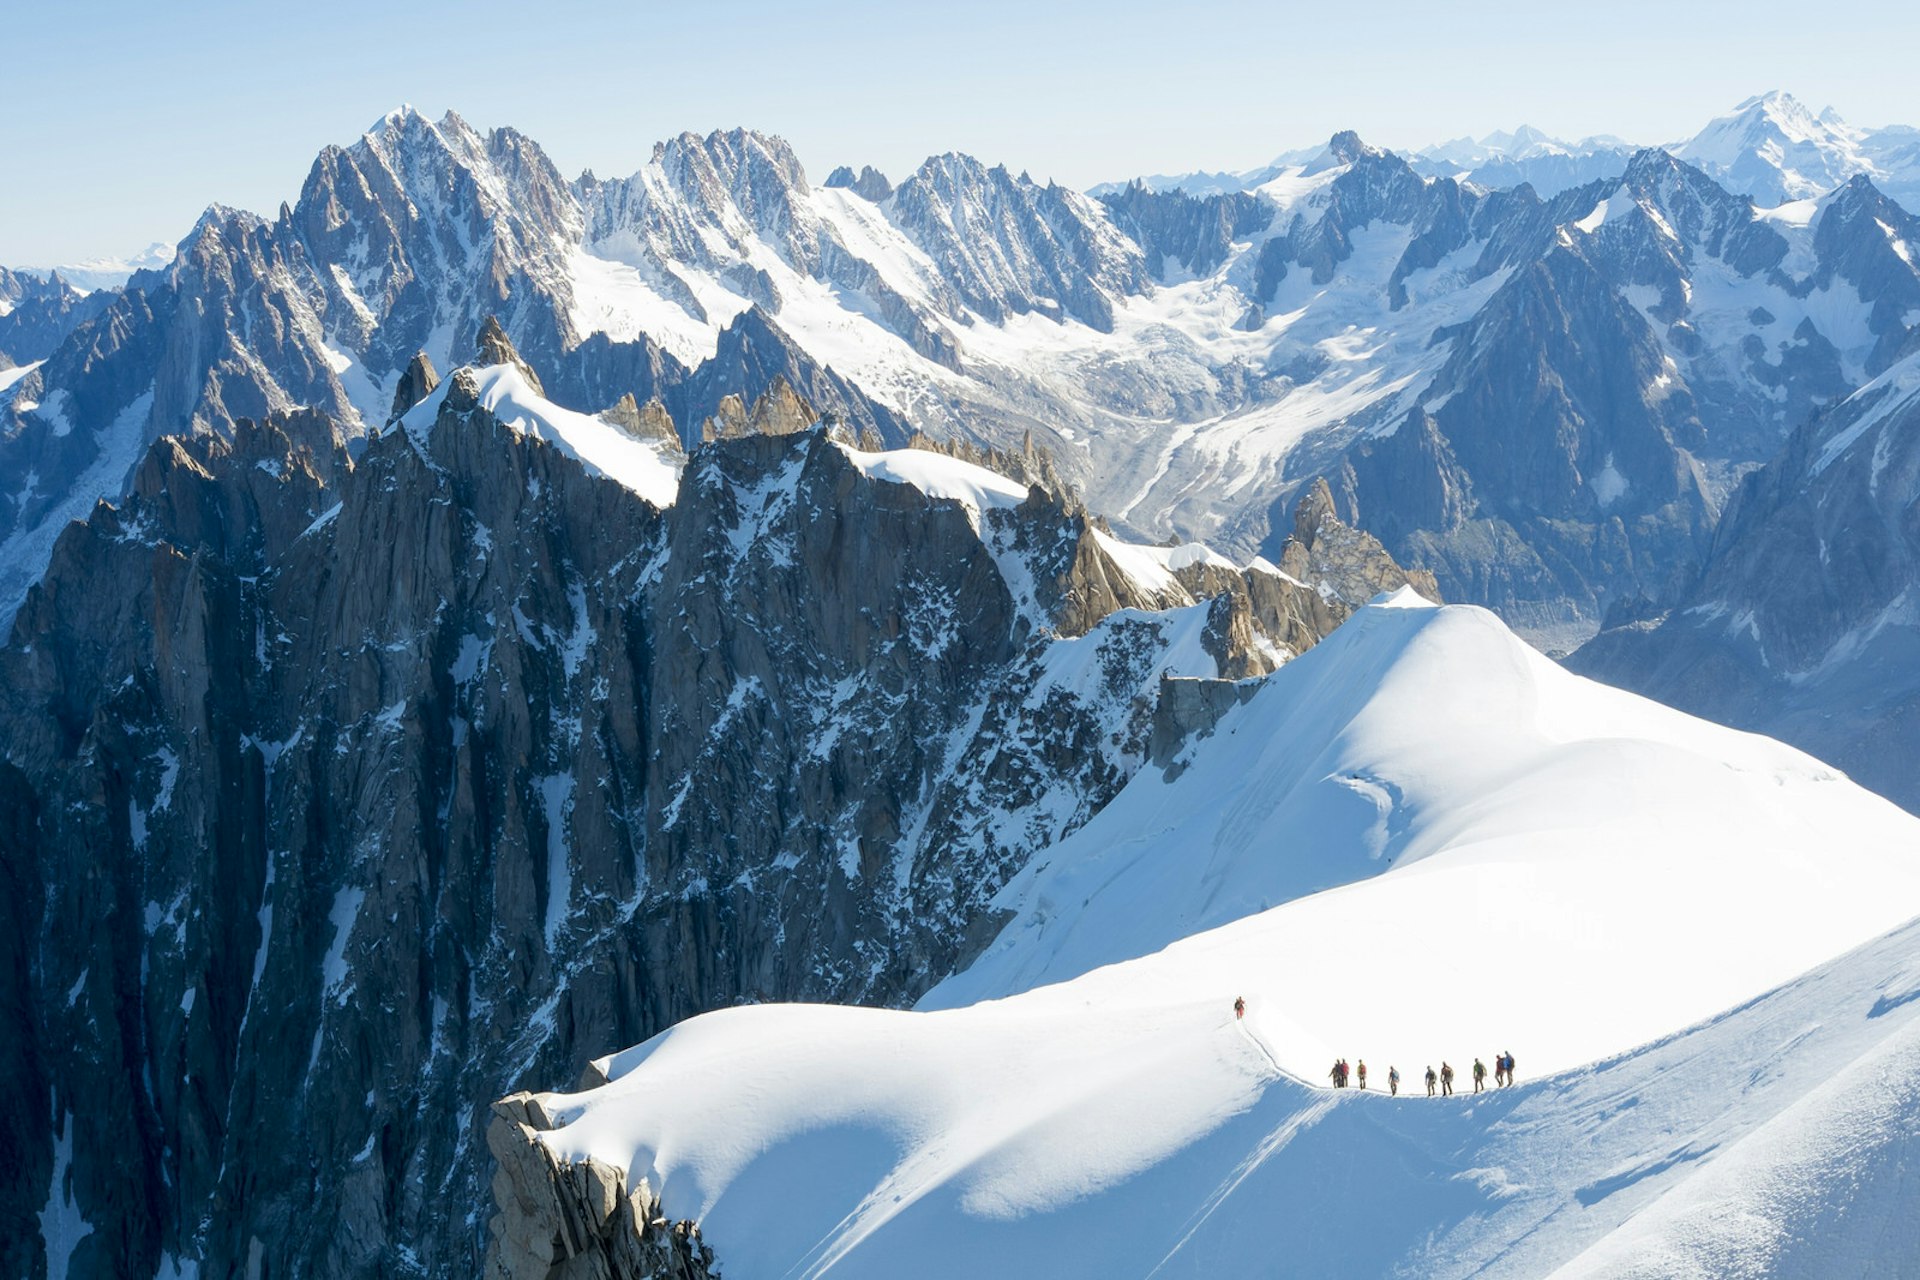 Mont Blanc mountaineers walking on snowy ridge © Nando Machado / Shutterstock